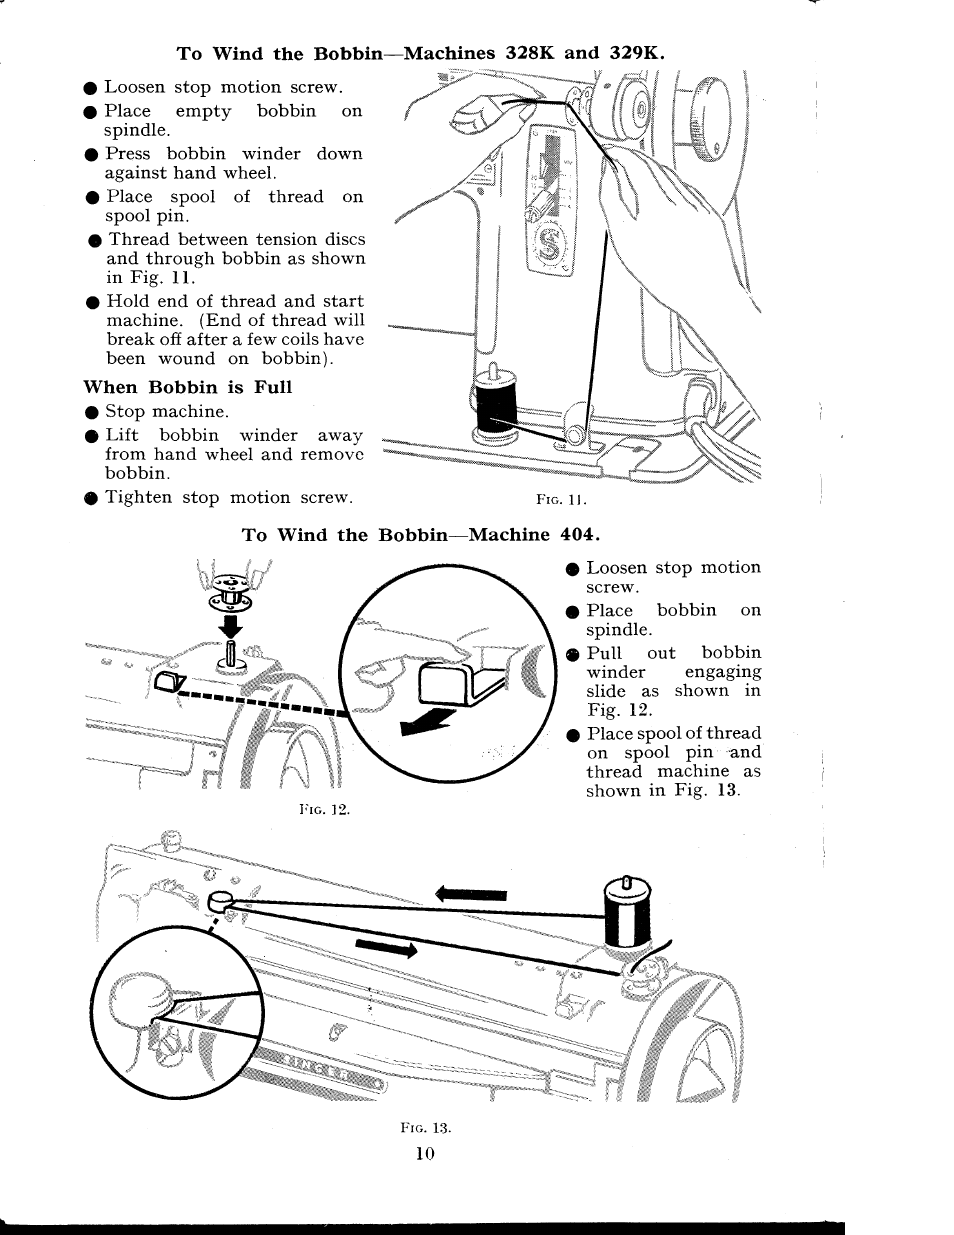 When bobbin is full, To wind the bobbin—machine 404 | SINGER 404K User Manual | Page 10 / 78